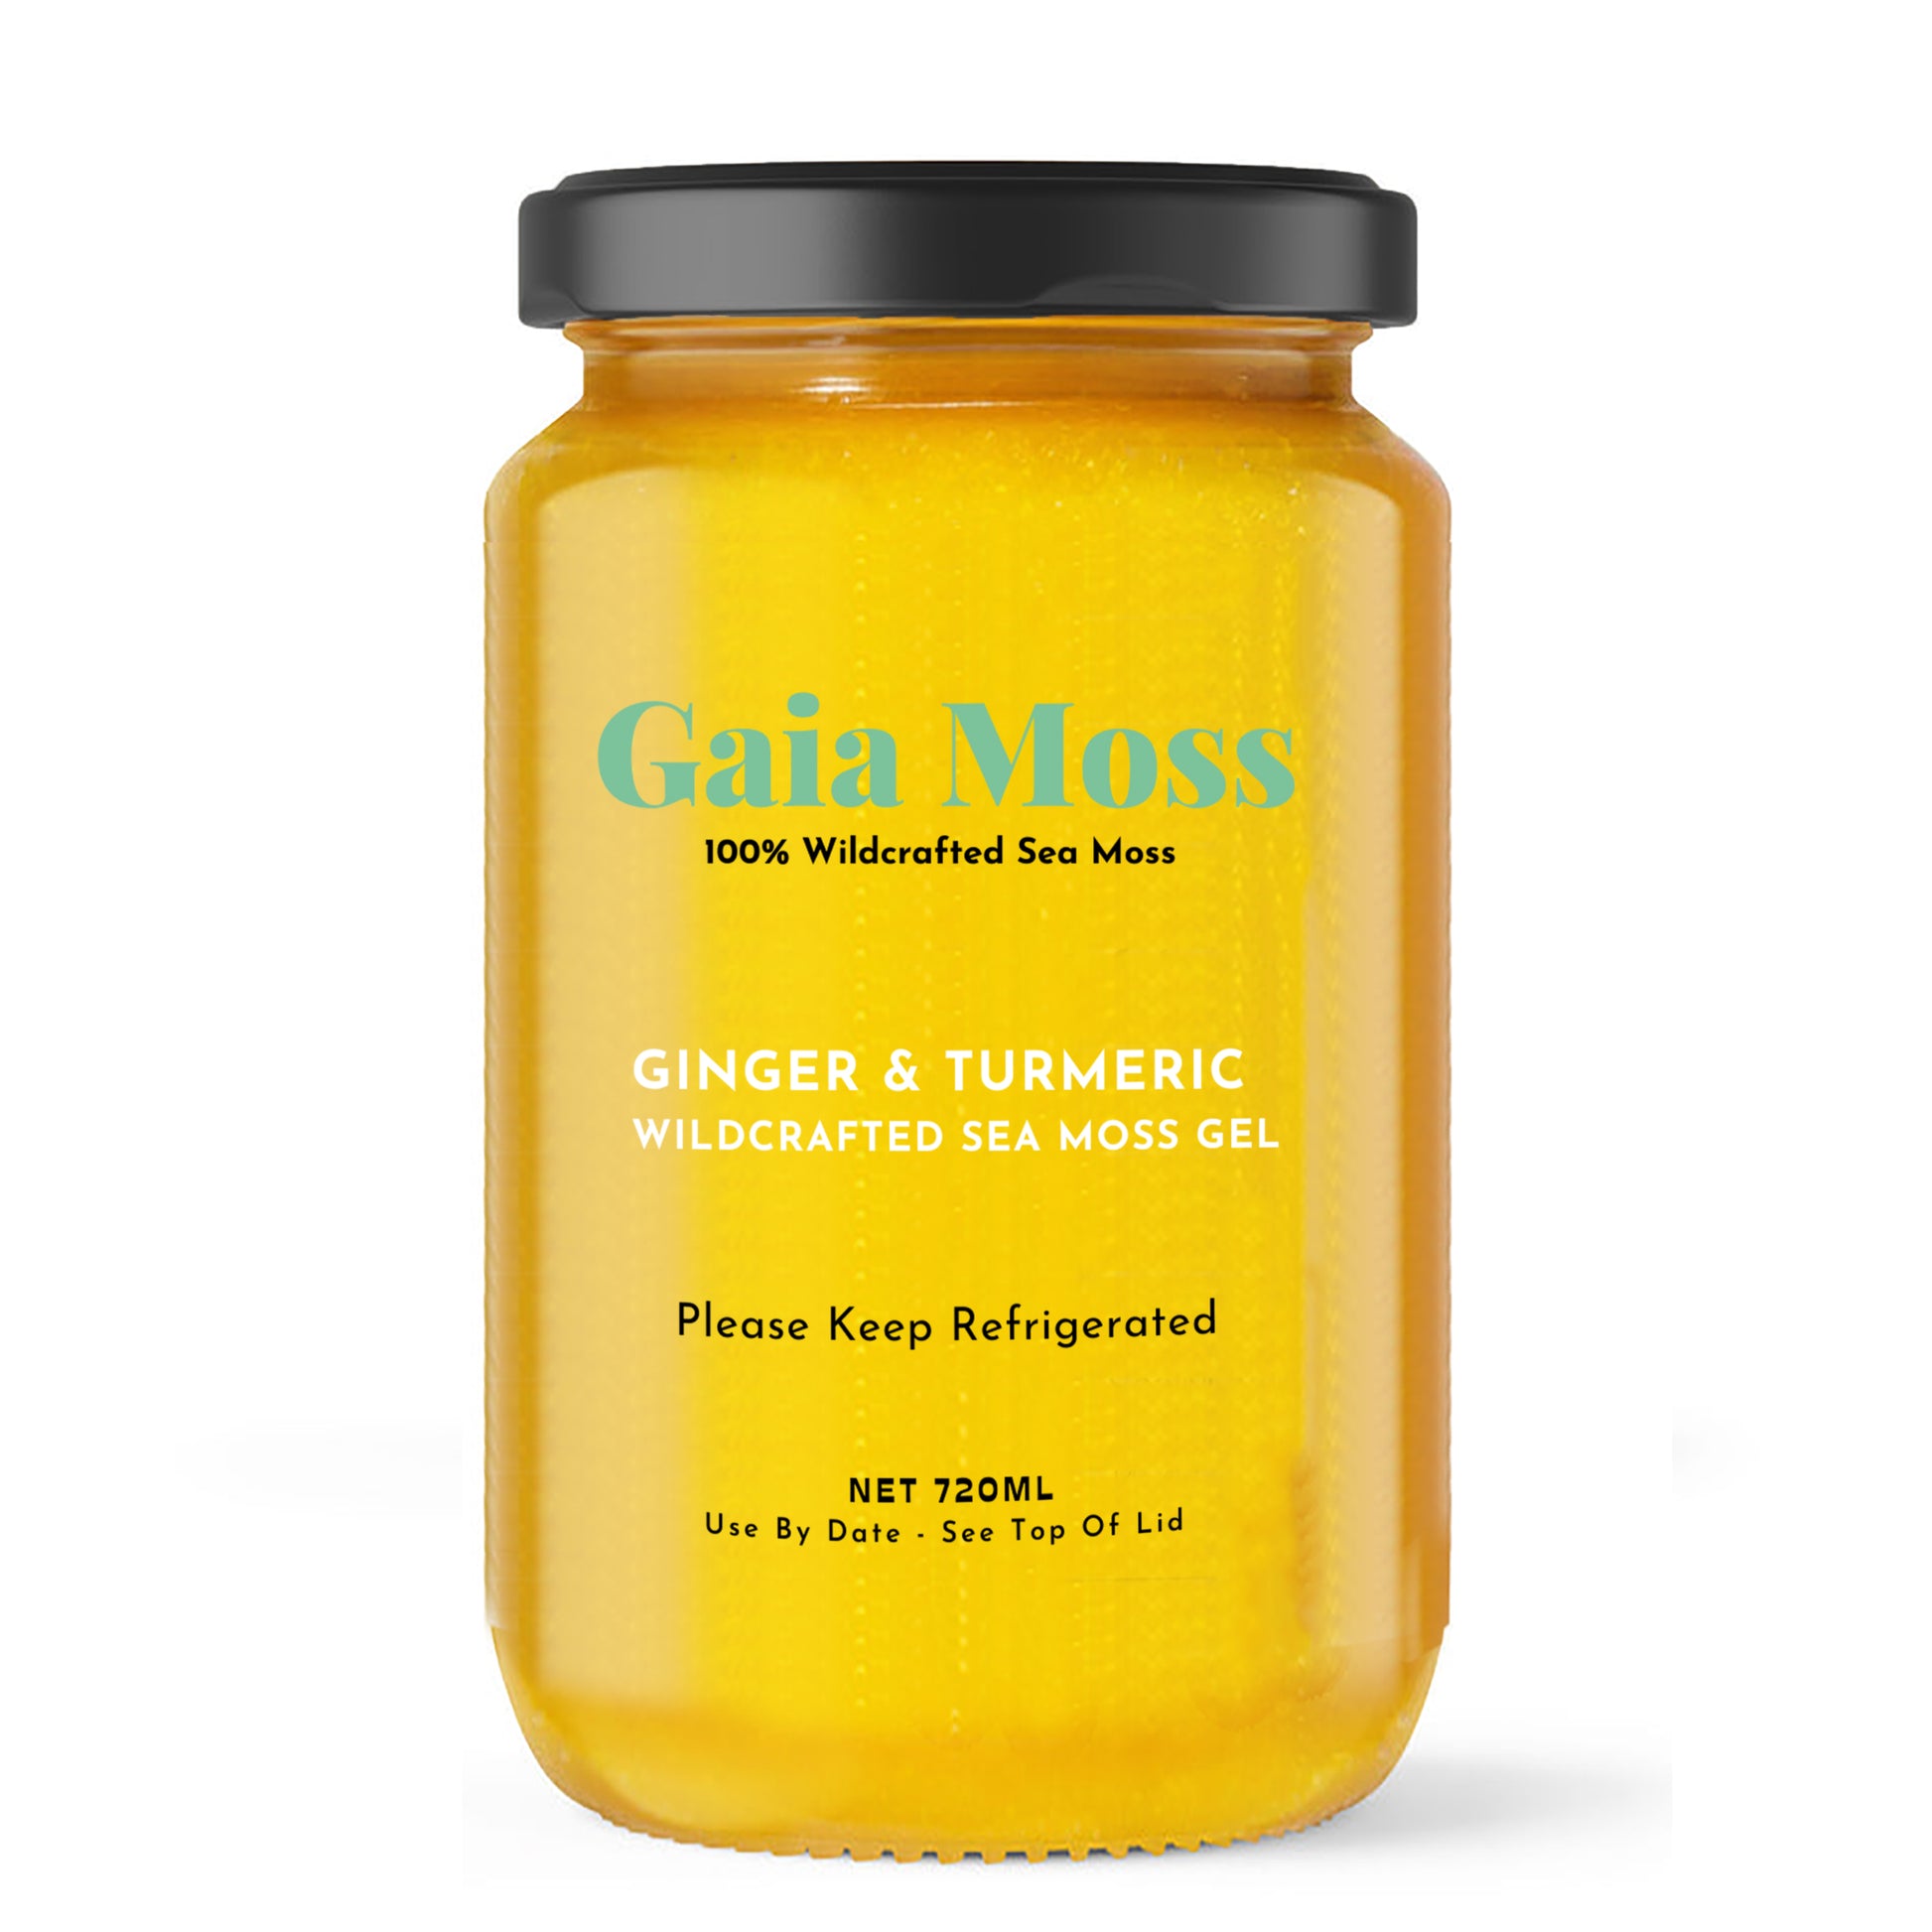 Ginger & Turmeric Infused Sea Moss Gel